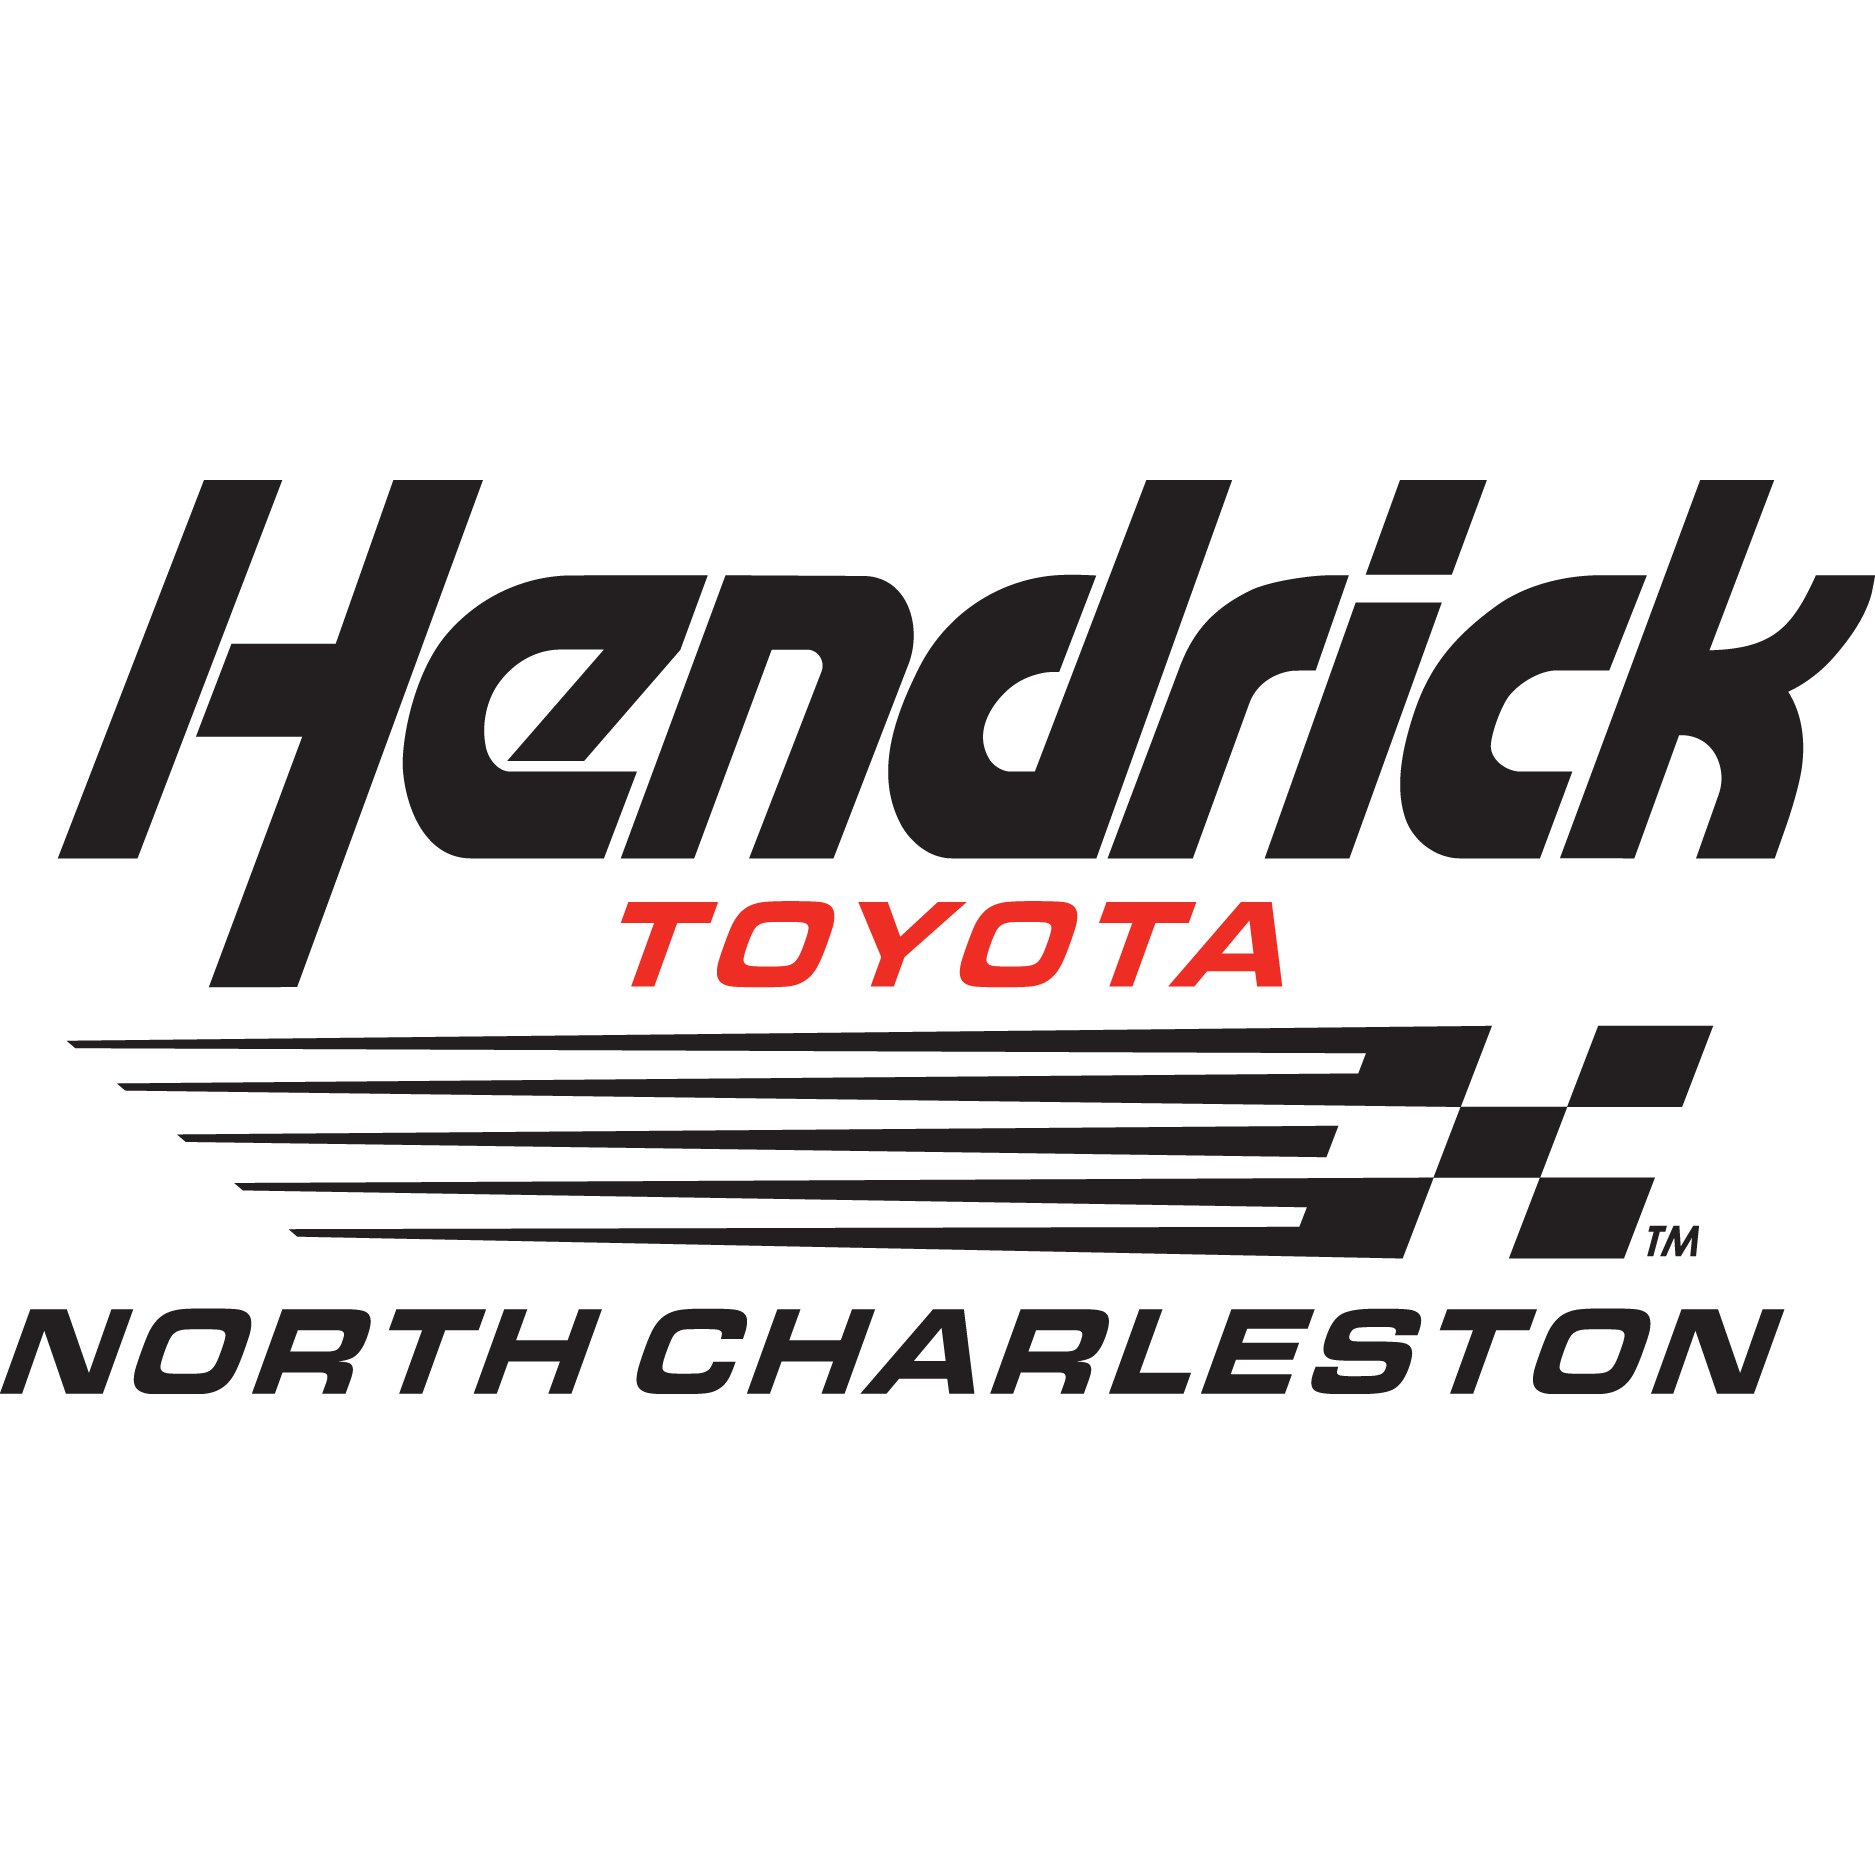 Hendrick Toyota North Charleston Logo